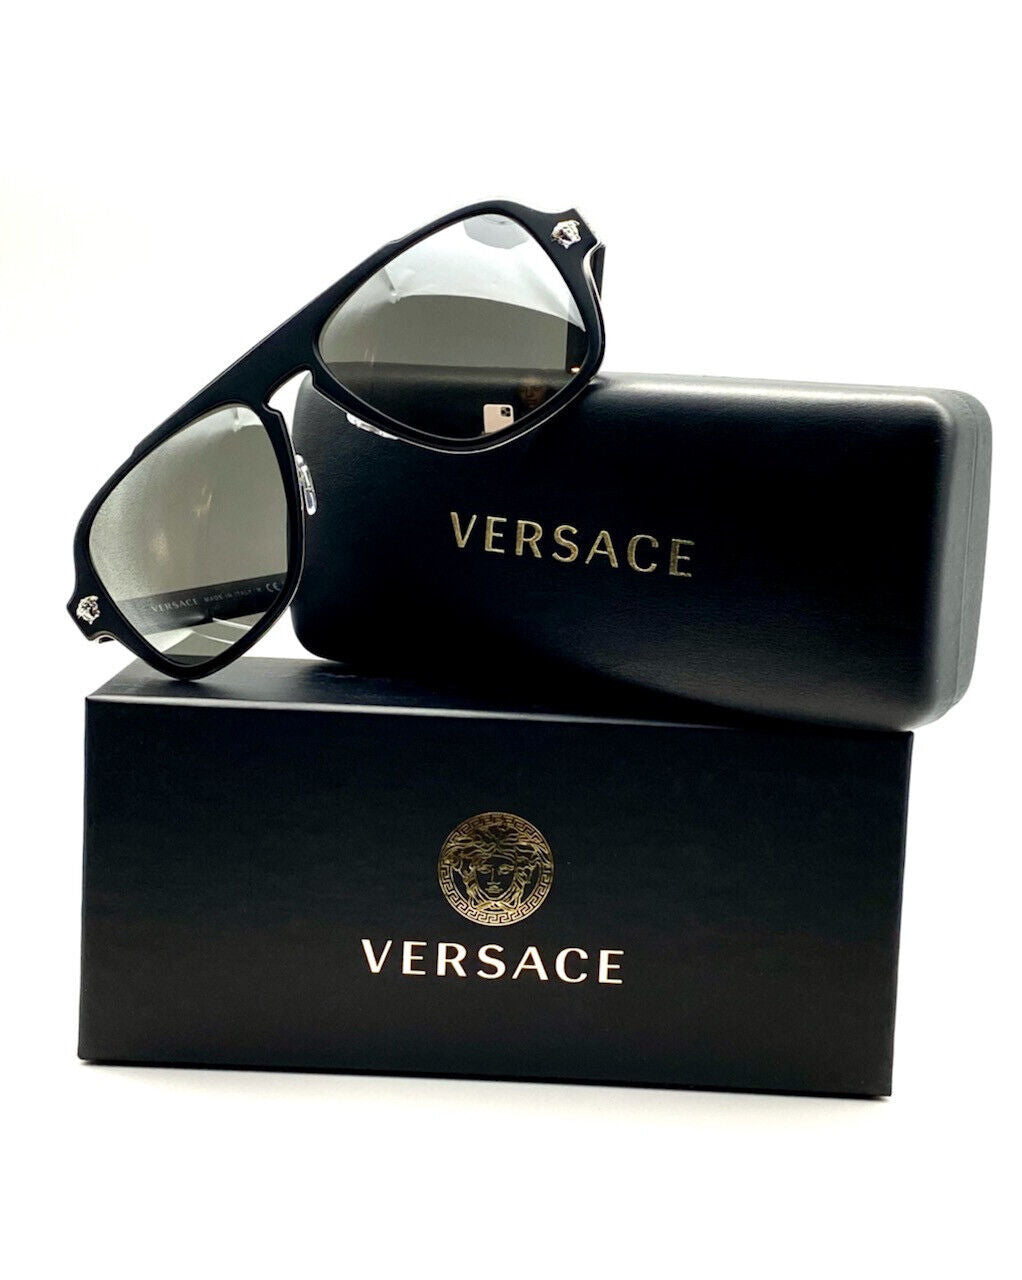 Versace VE2199 10006G Black/Light Gray Silver Mirrored Metal Unisex Sunglasses